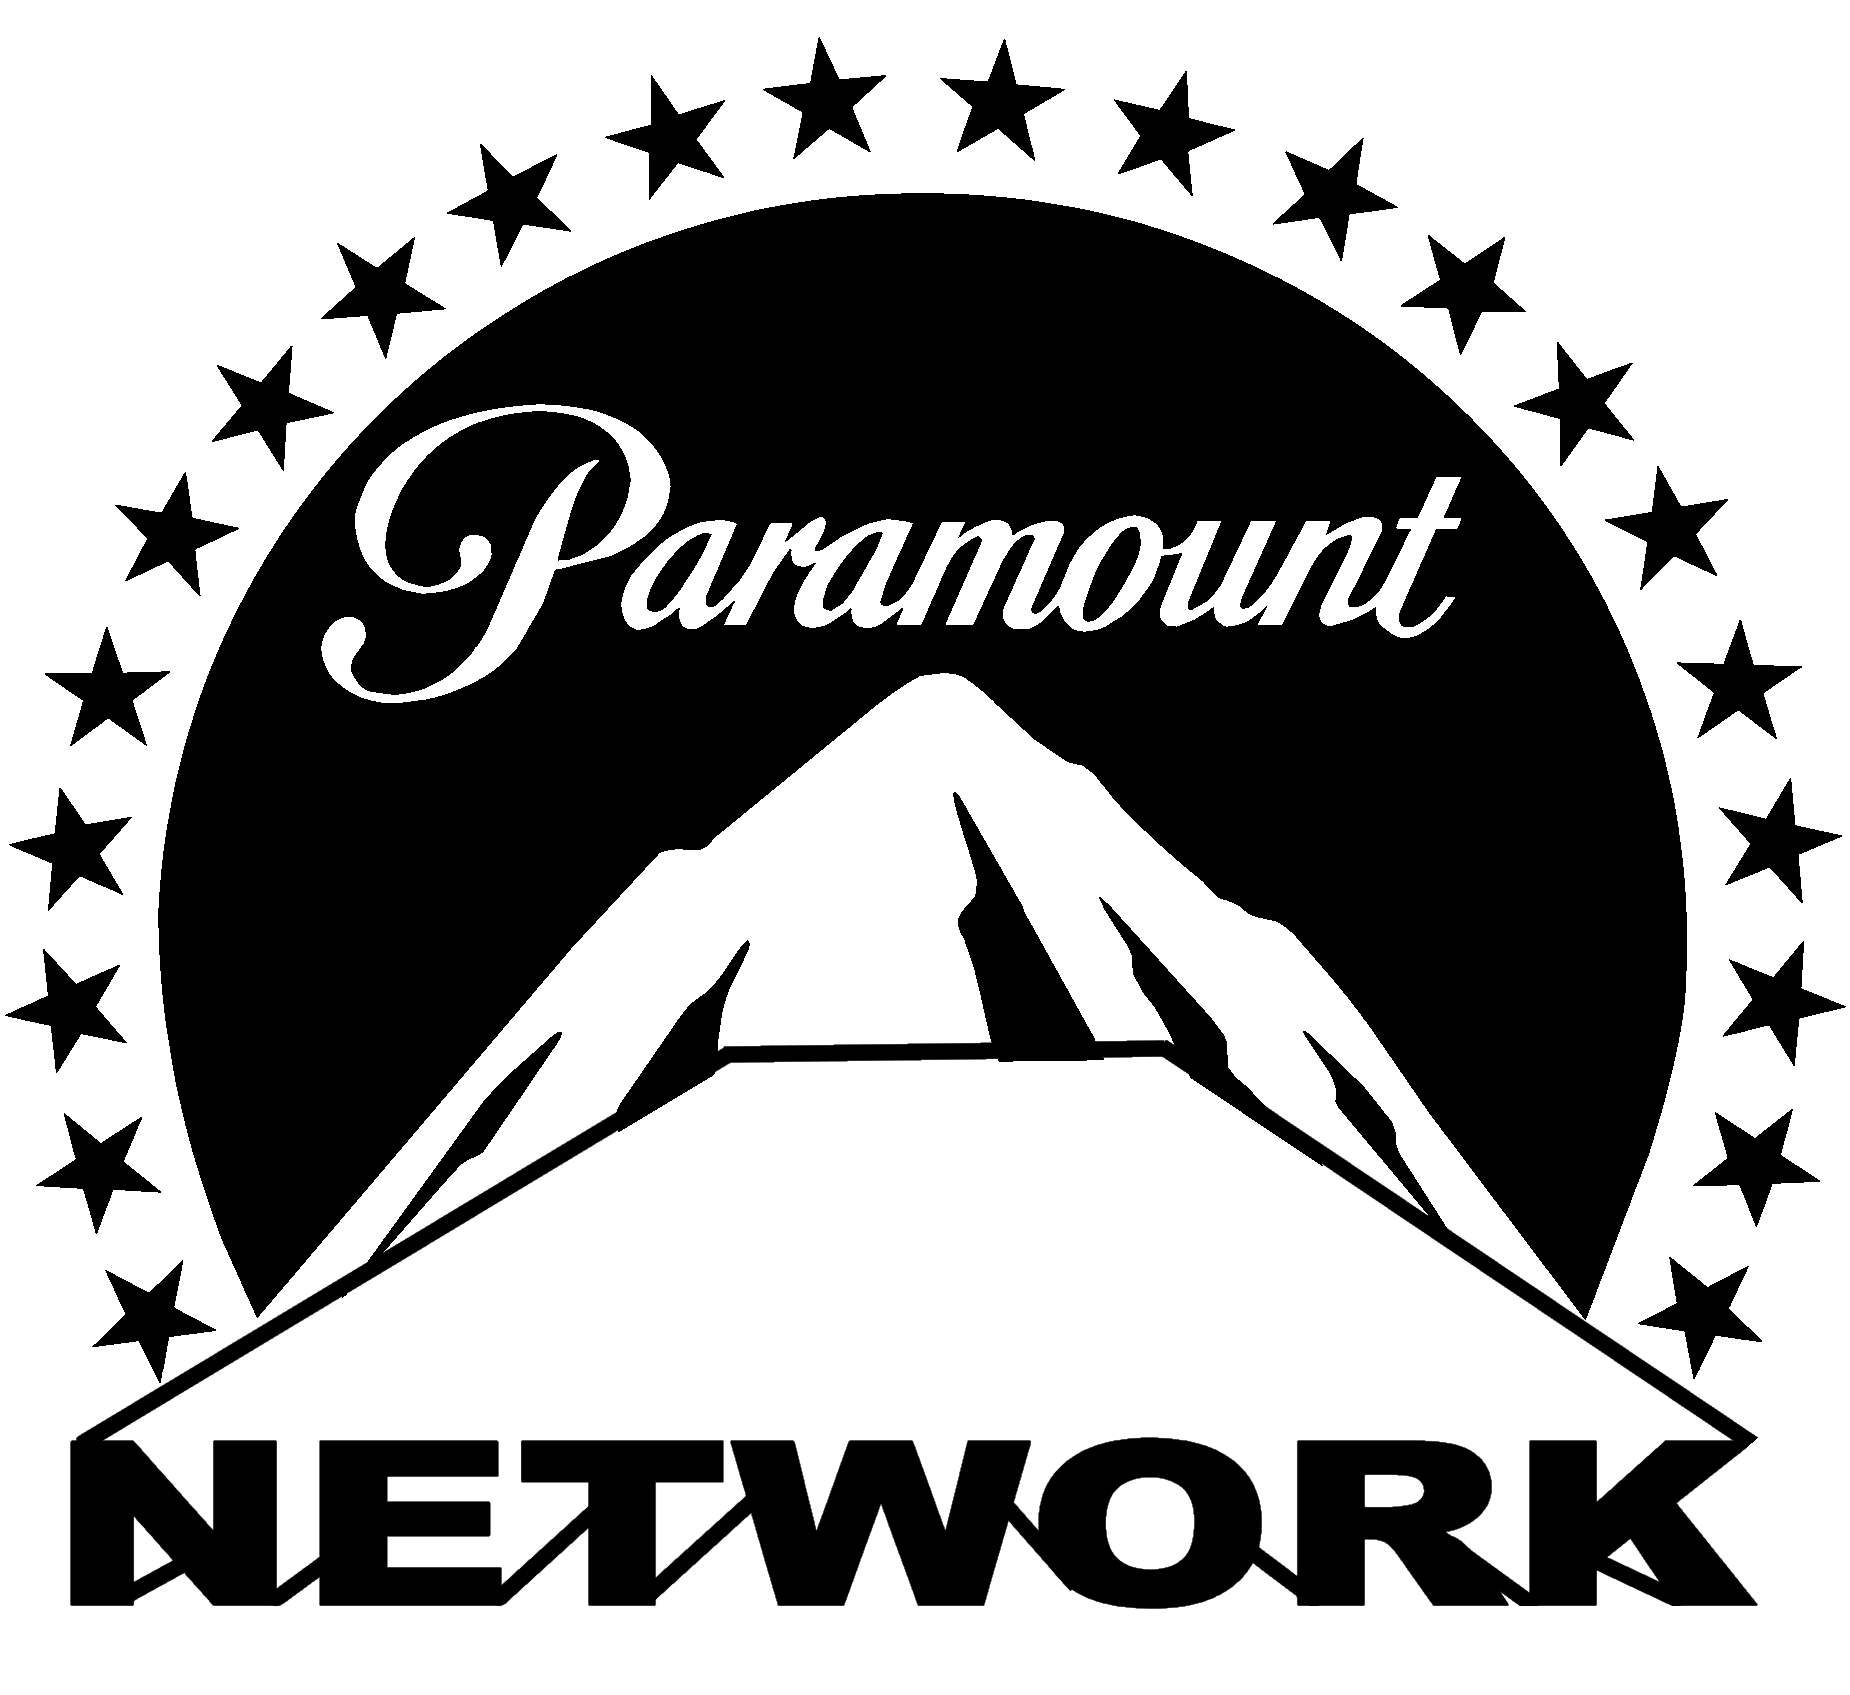 Paramount Network Logo - Paramount Television Network | Dream Logos Wiki | FANDOM powered by ...